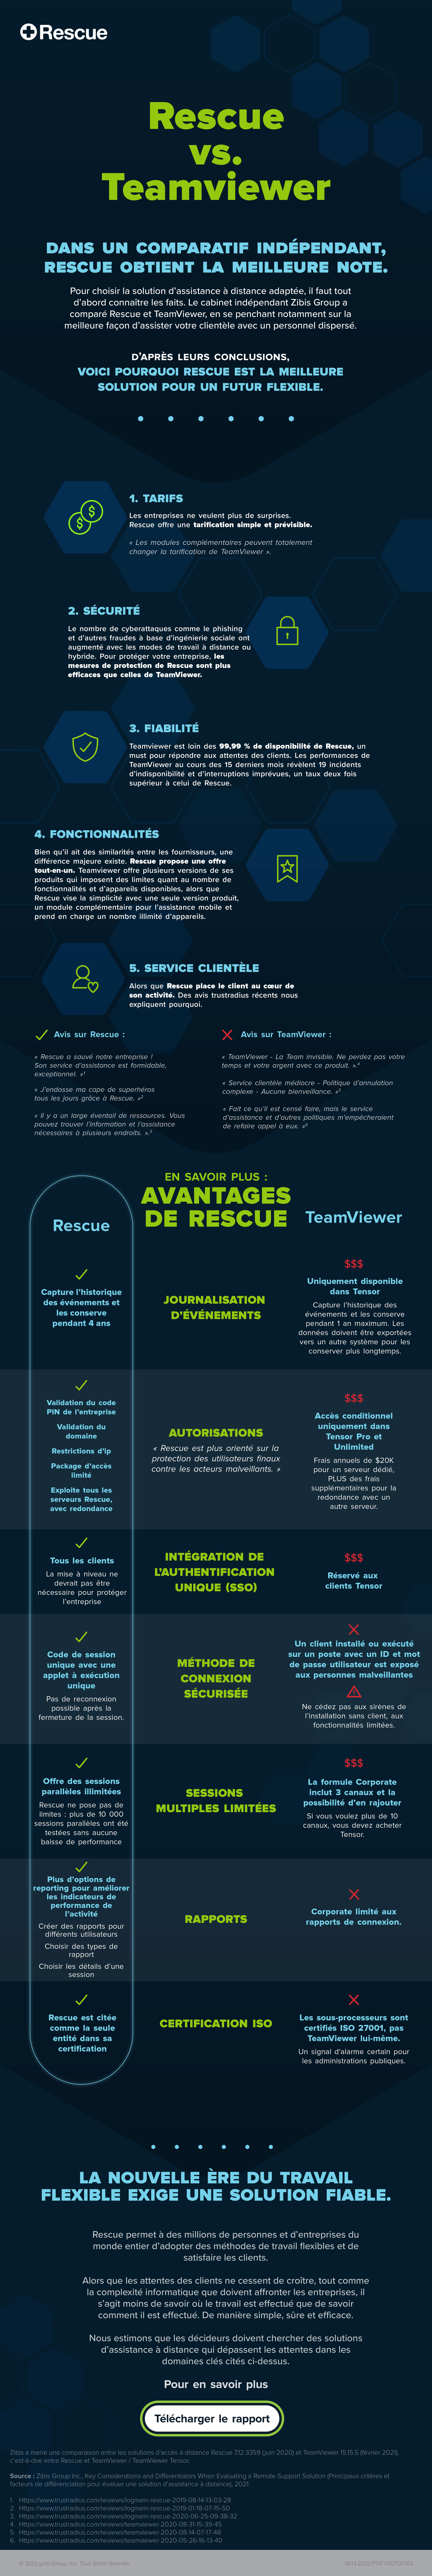 LogMeIn Rescue vs TeamViewer FR